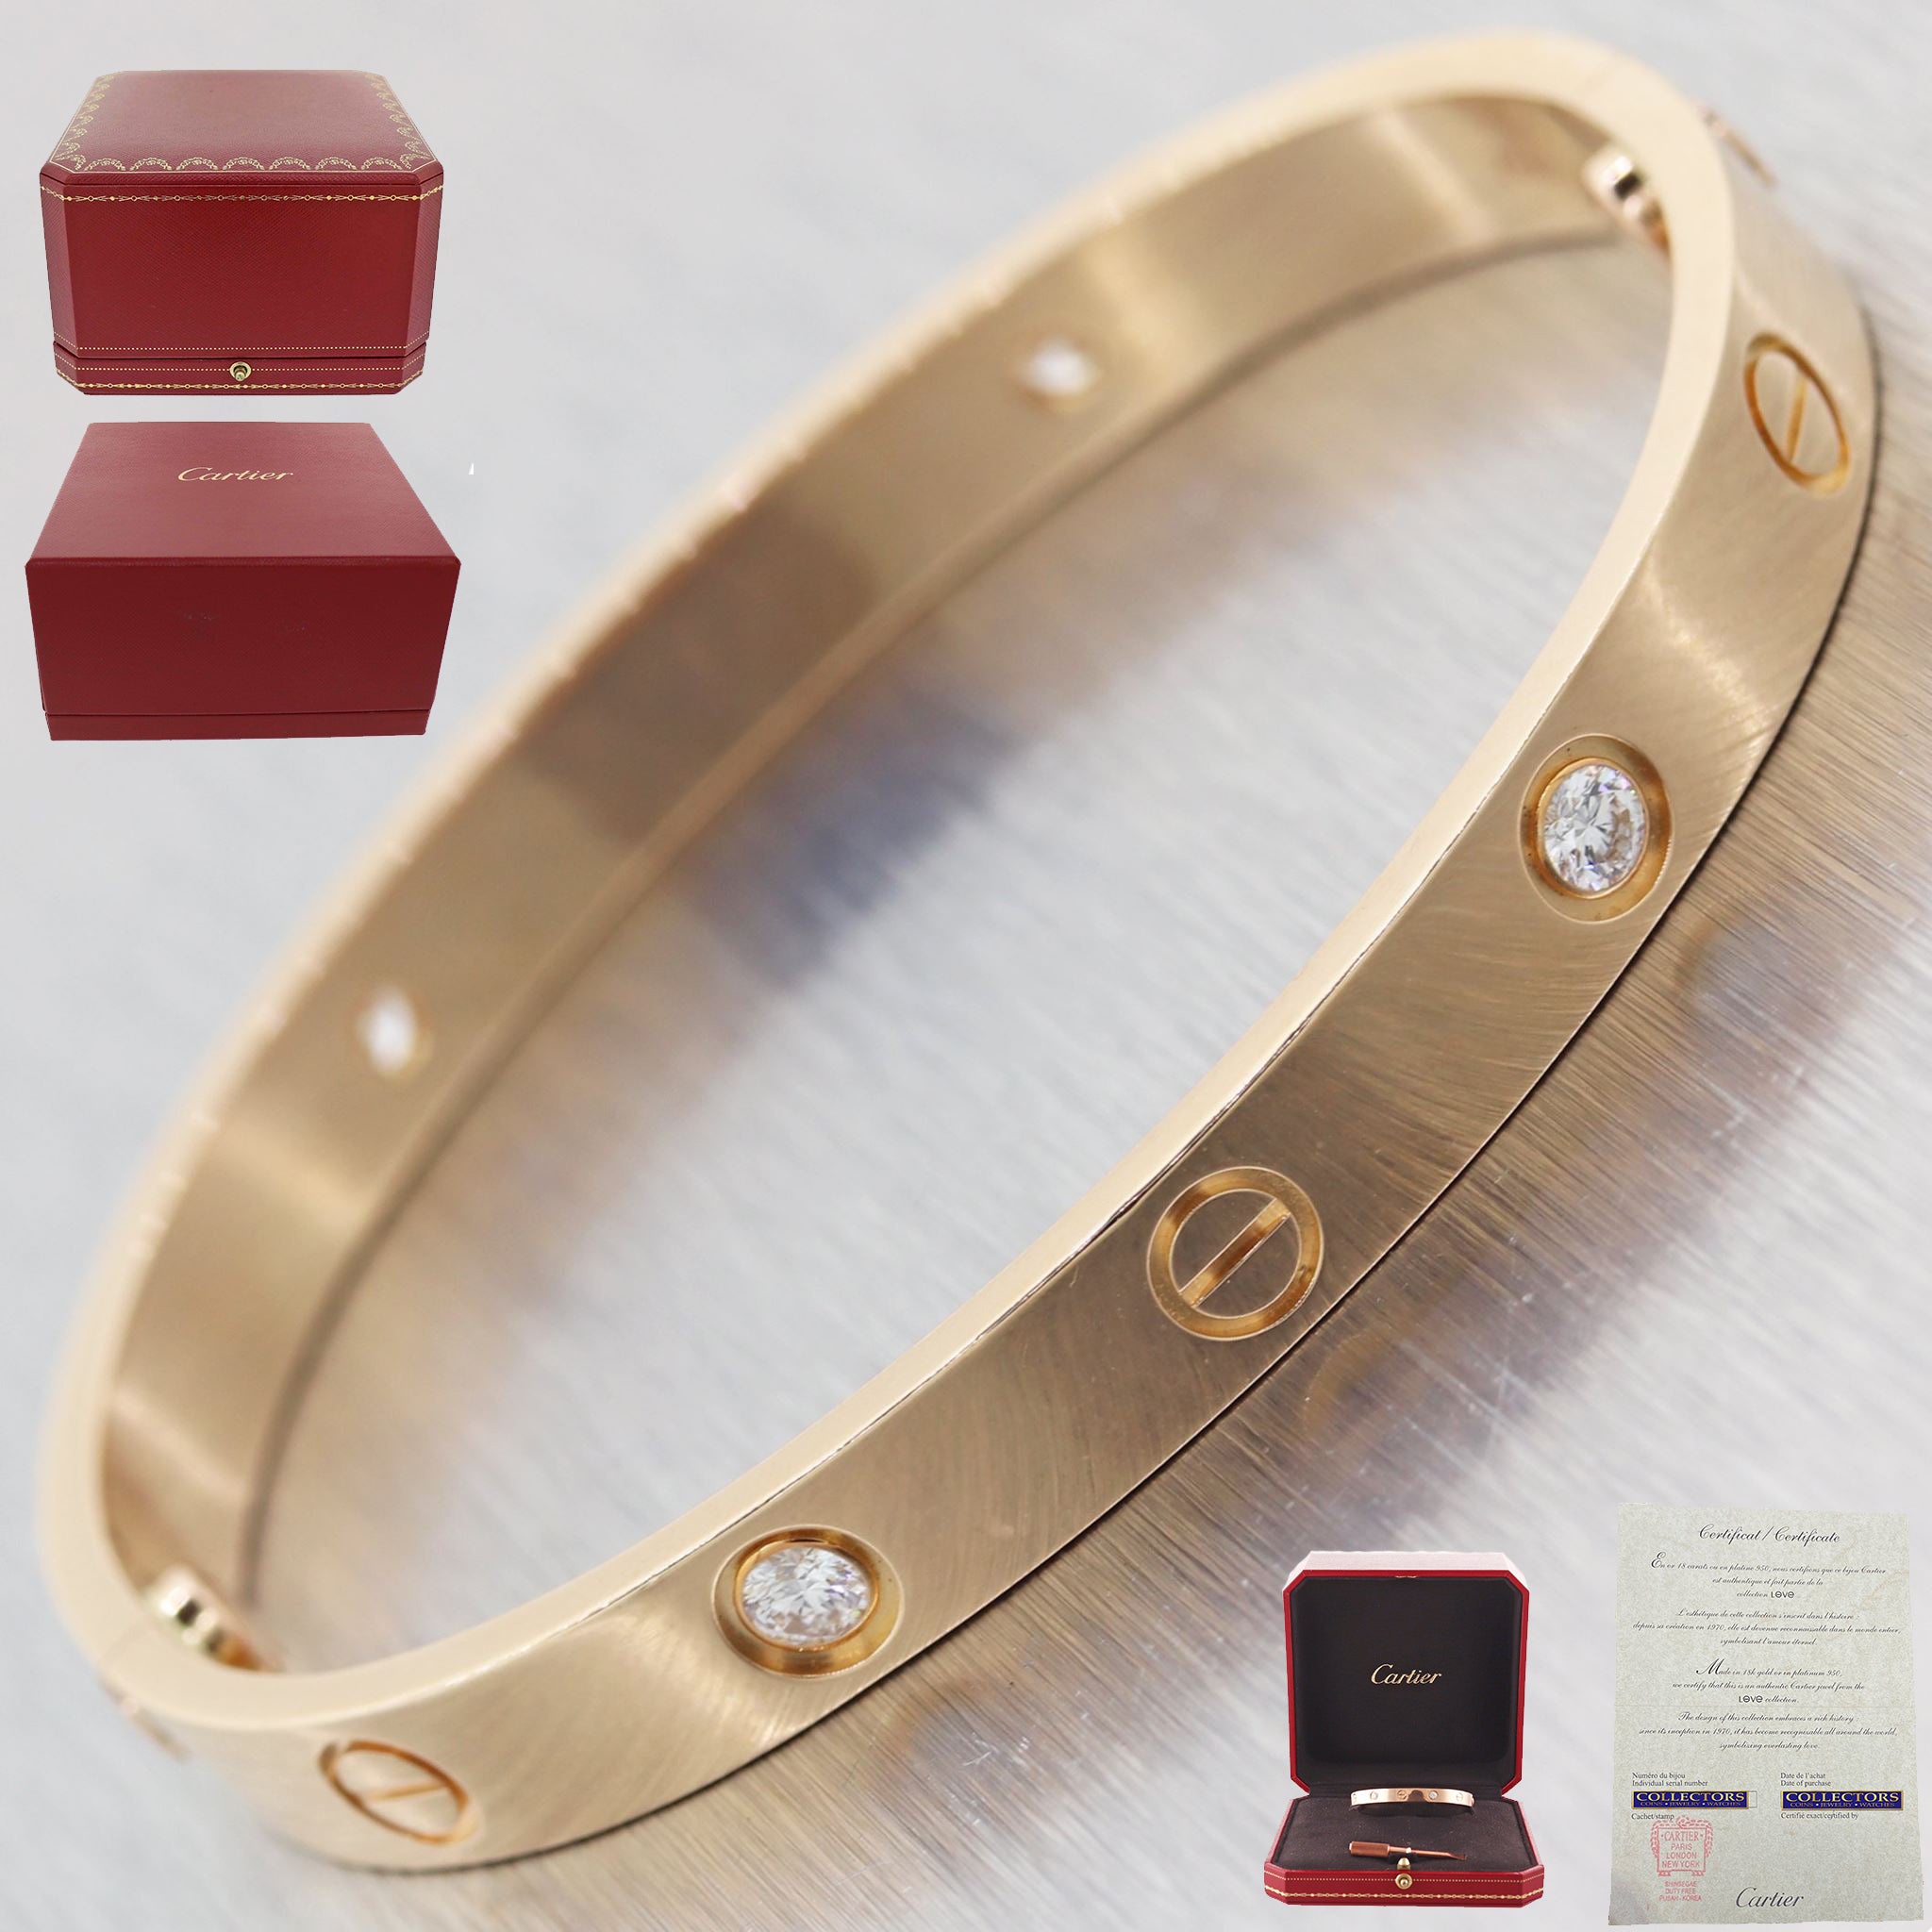 rose gold cartier style bracelet